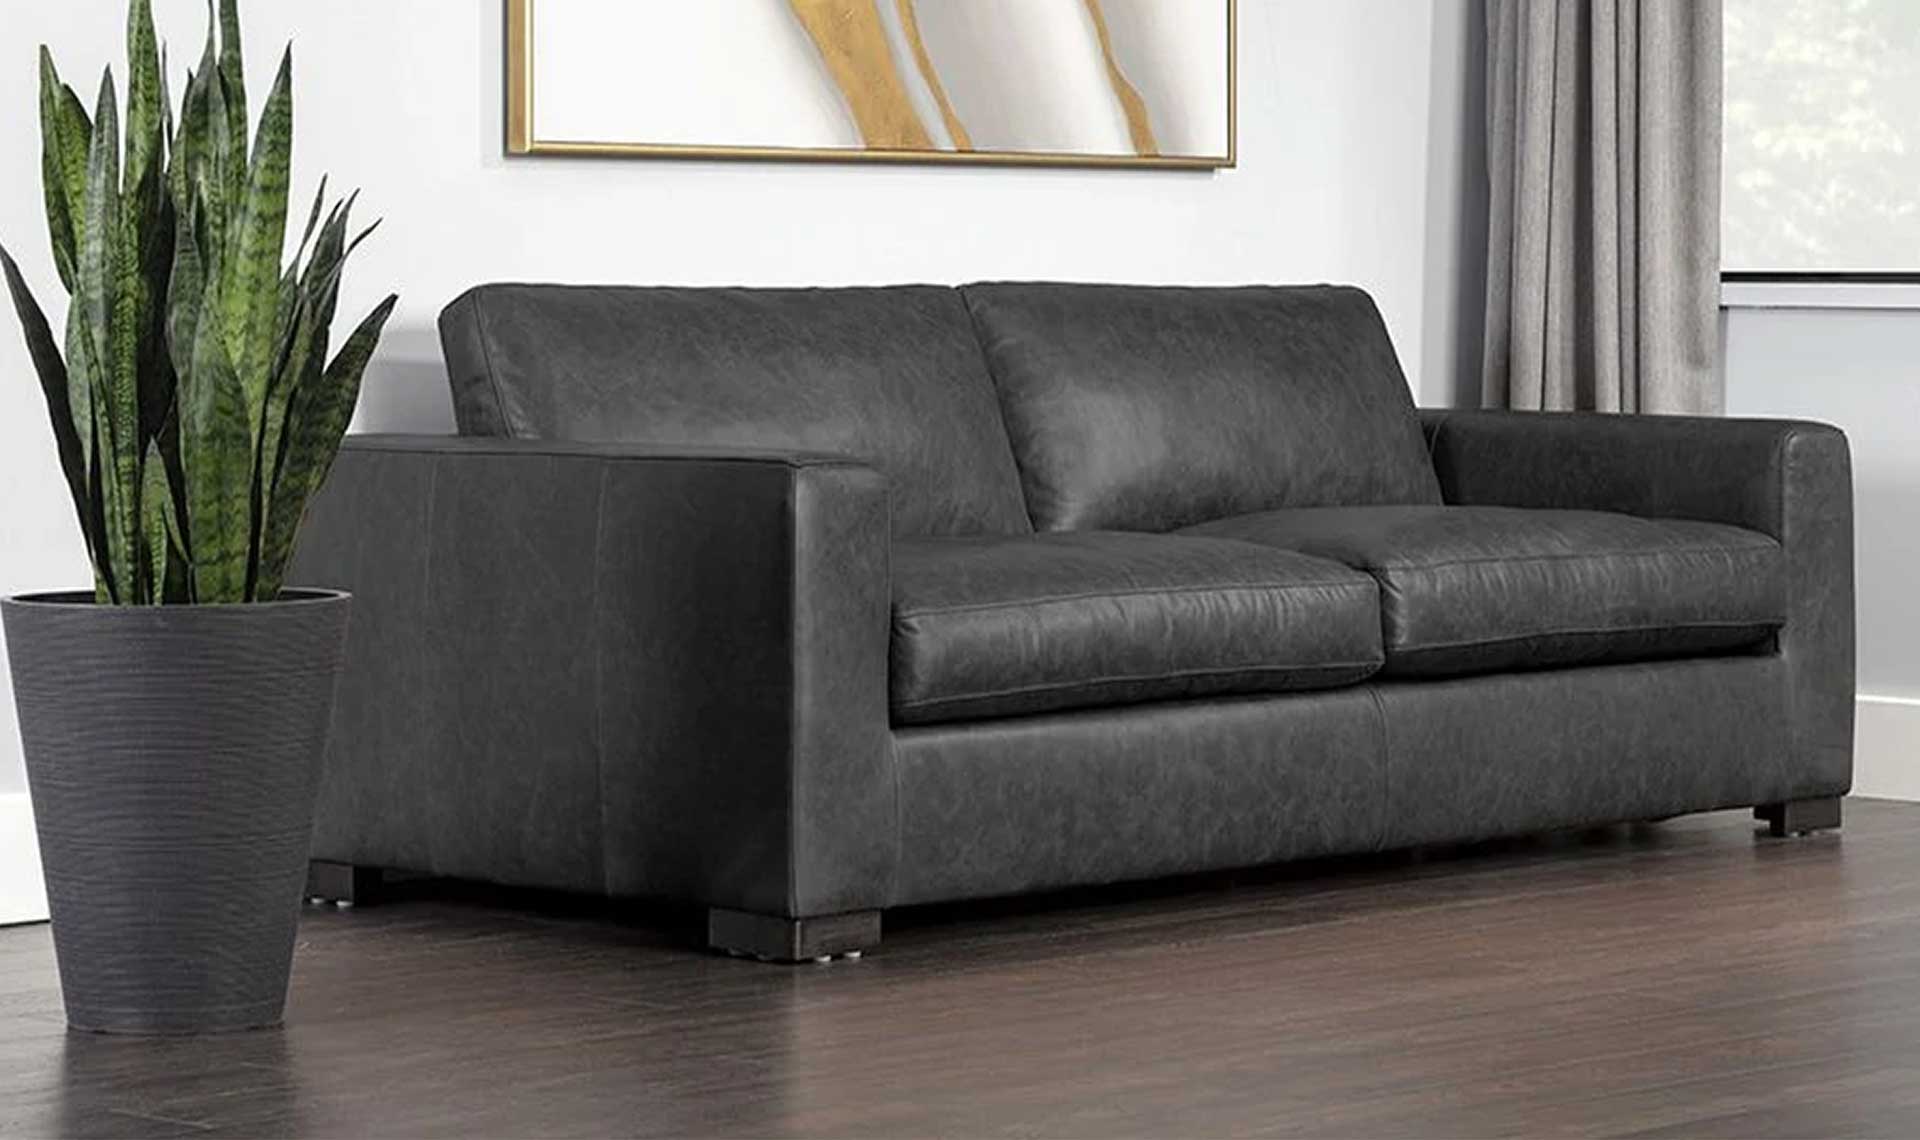 baylor sofa marseille black leather full 1